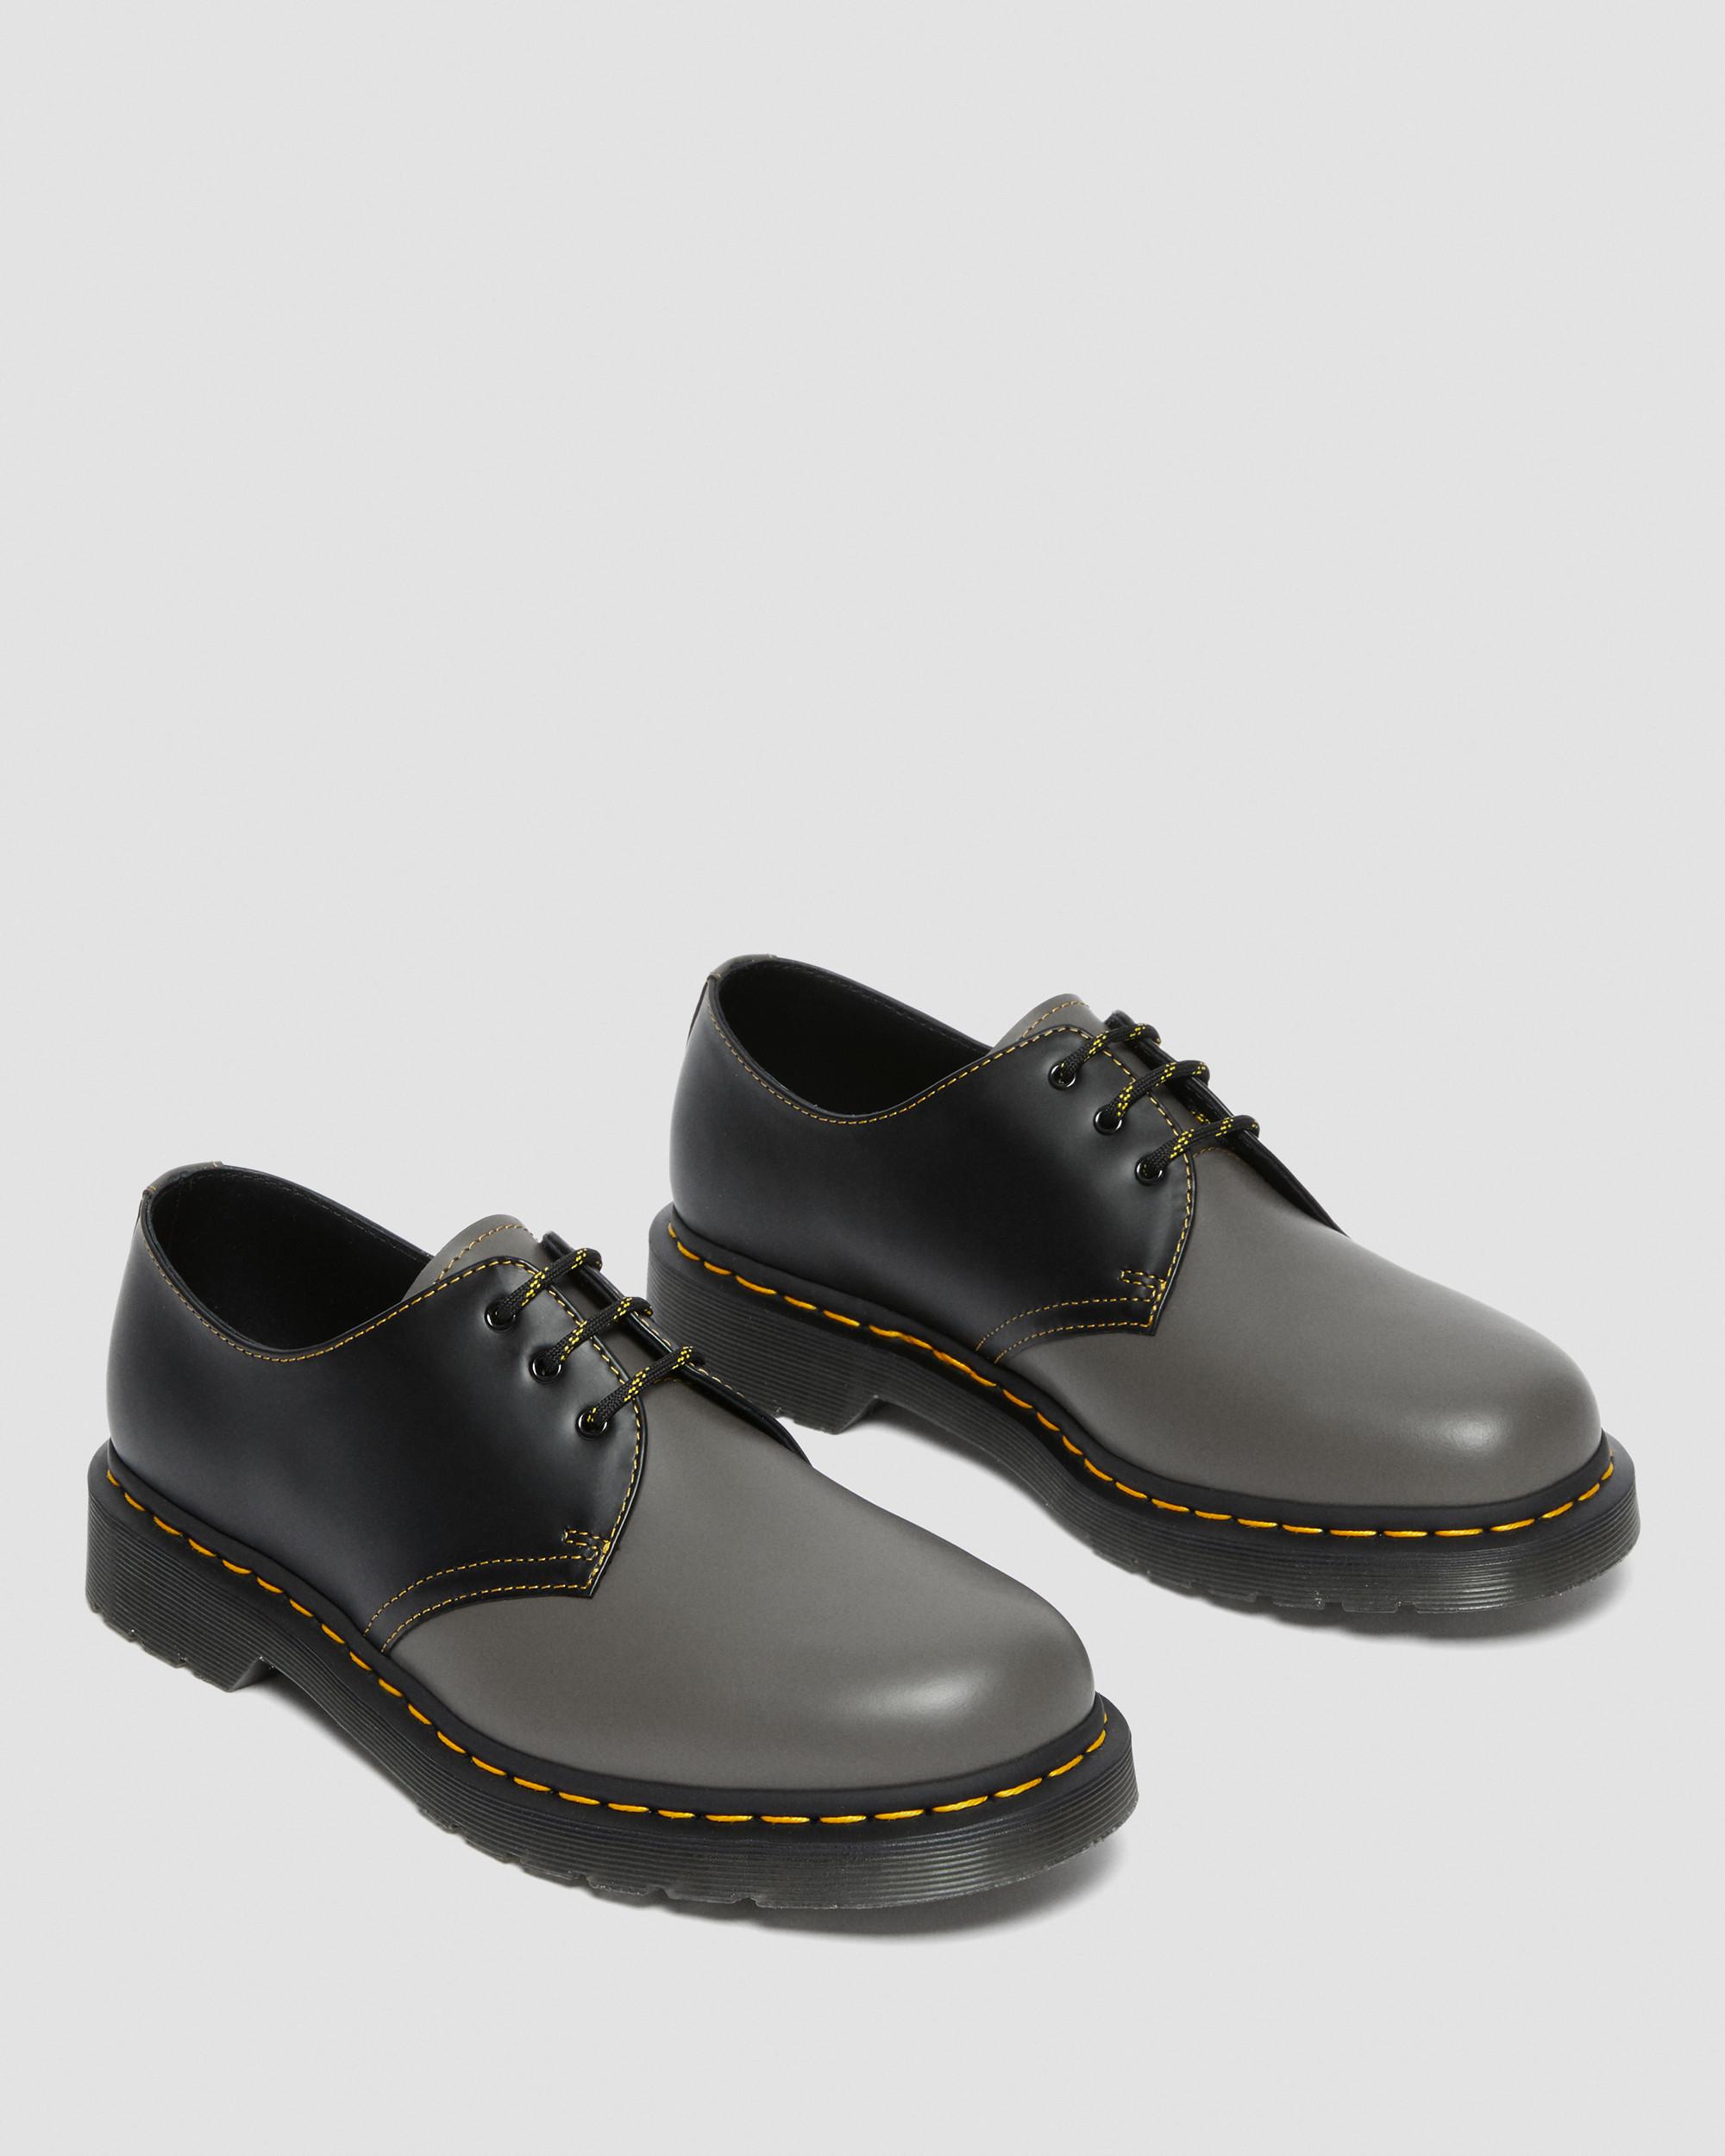 1461 Smooth Leather Platform Shoes In Black Martens, 56% OFF